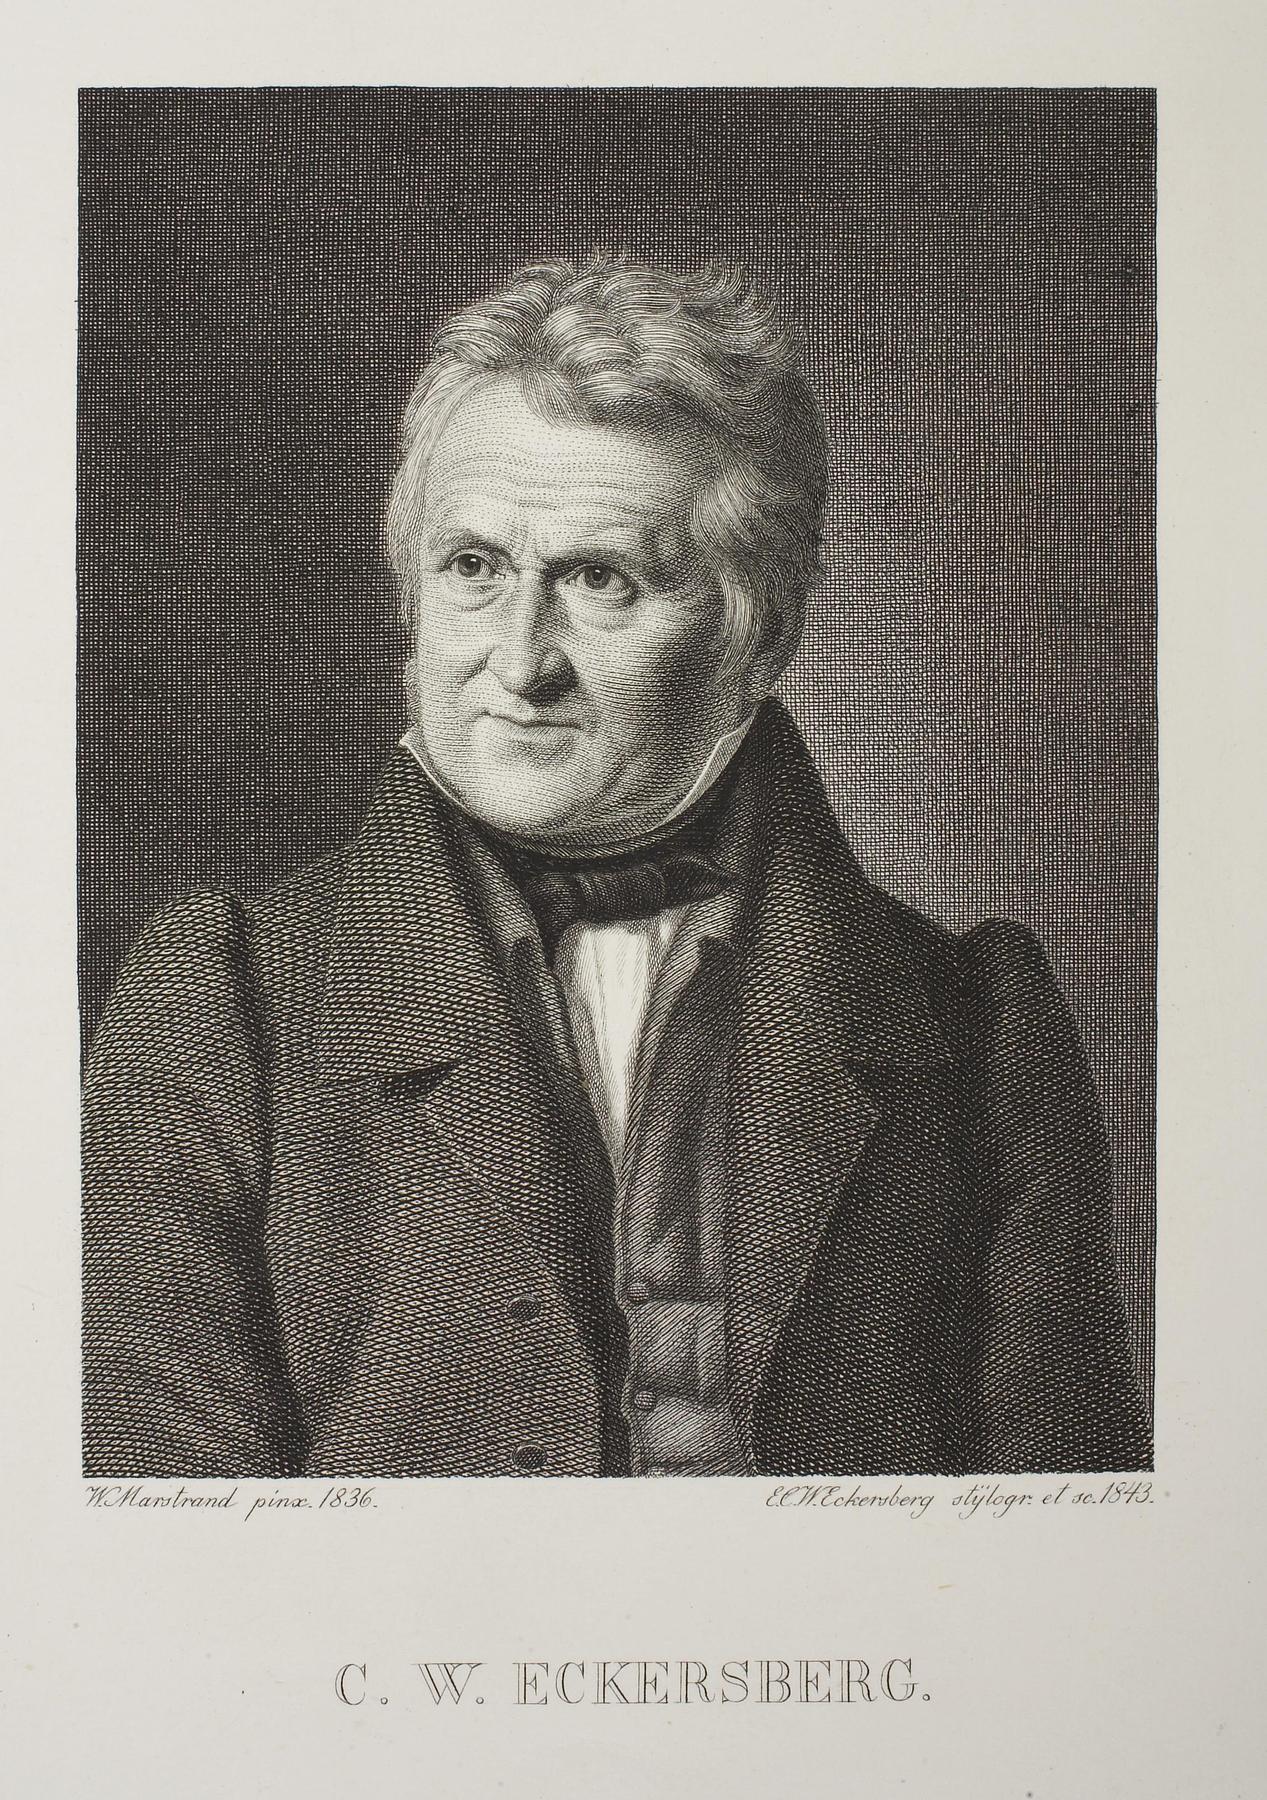 C.W. Eckersberg, E498